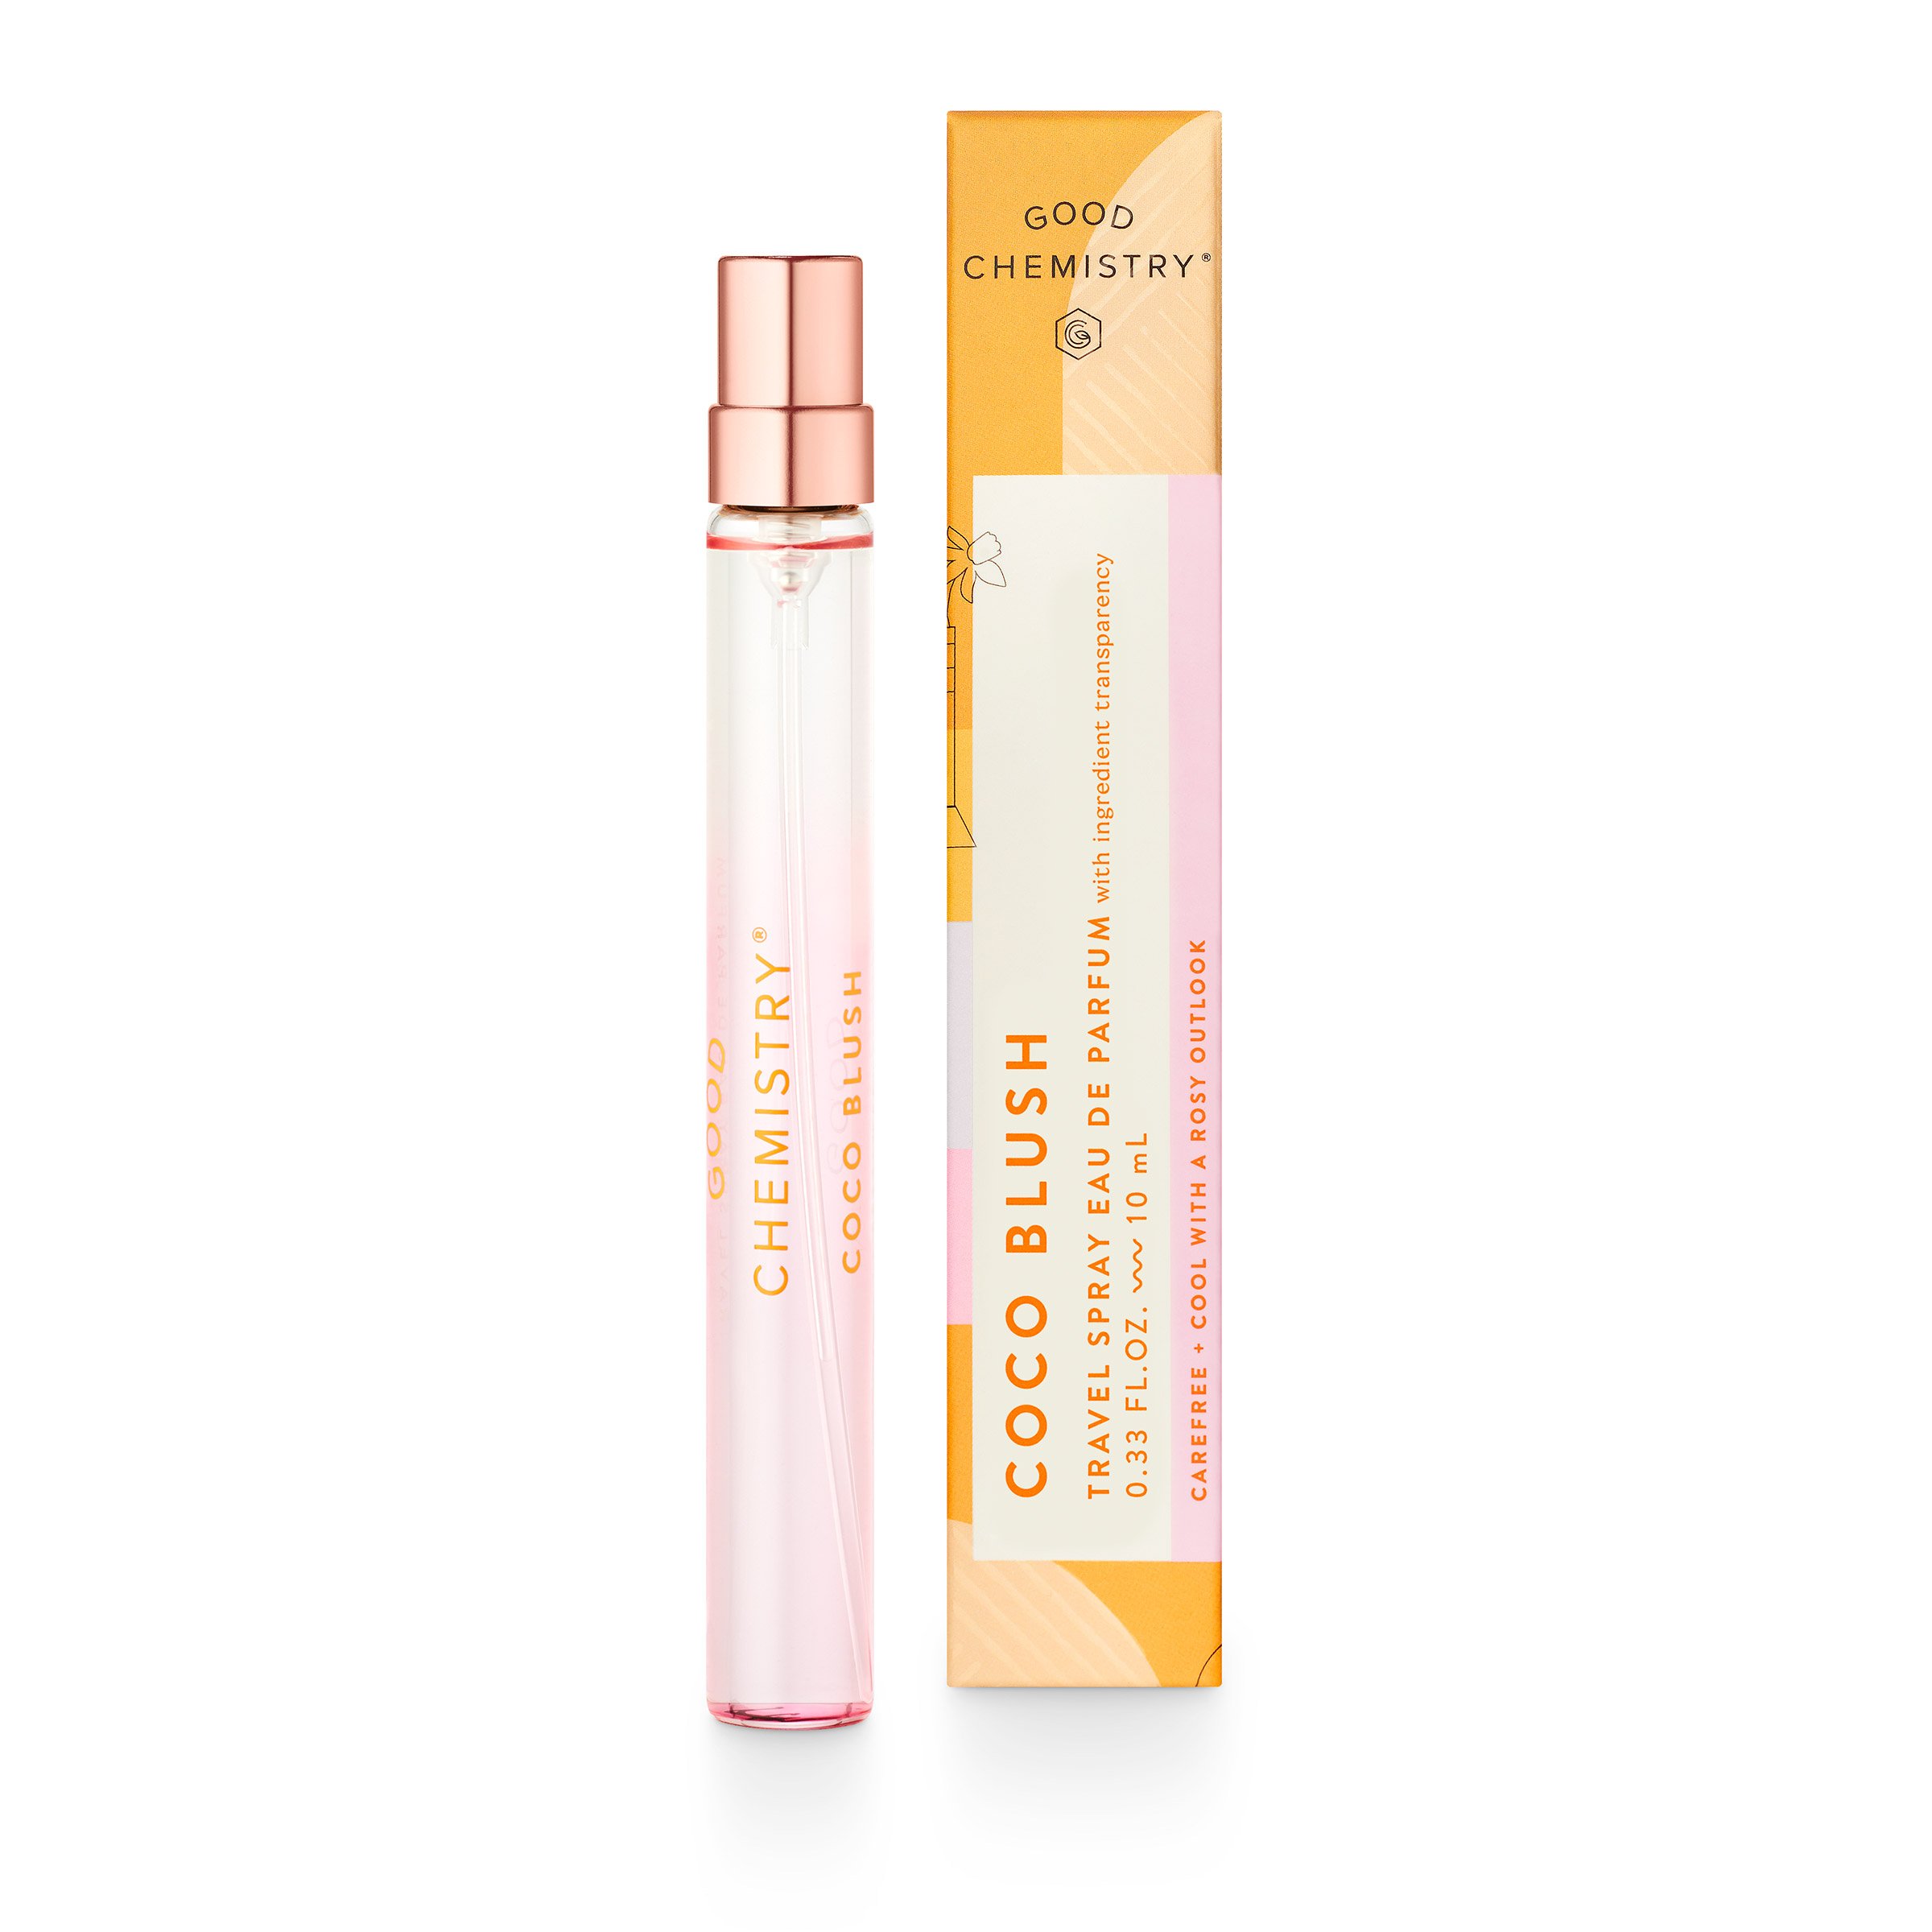 Good Chemistry Travel Spray Perfume - Coco Blush - Shop Fragrance